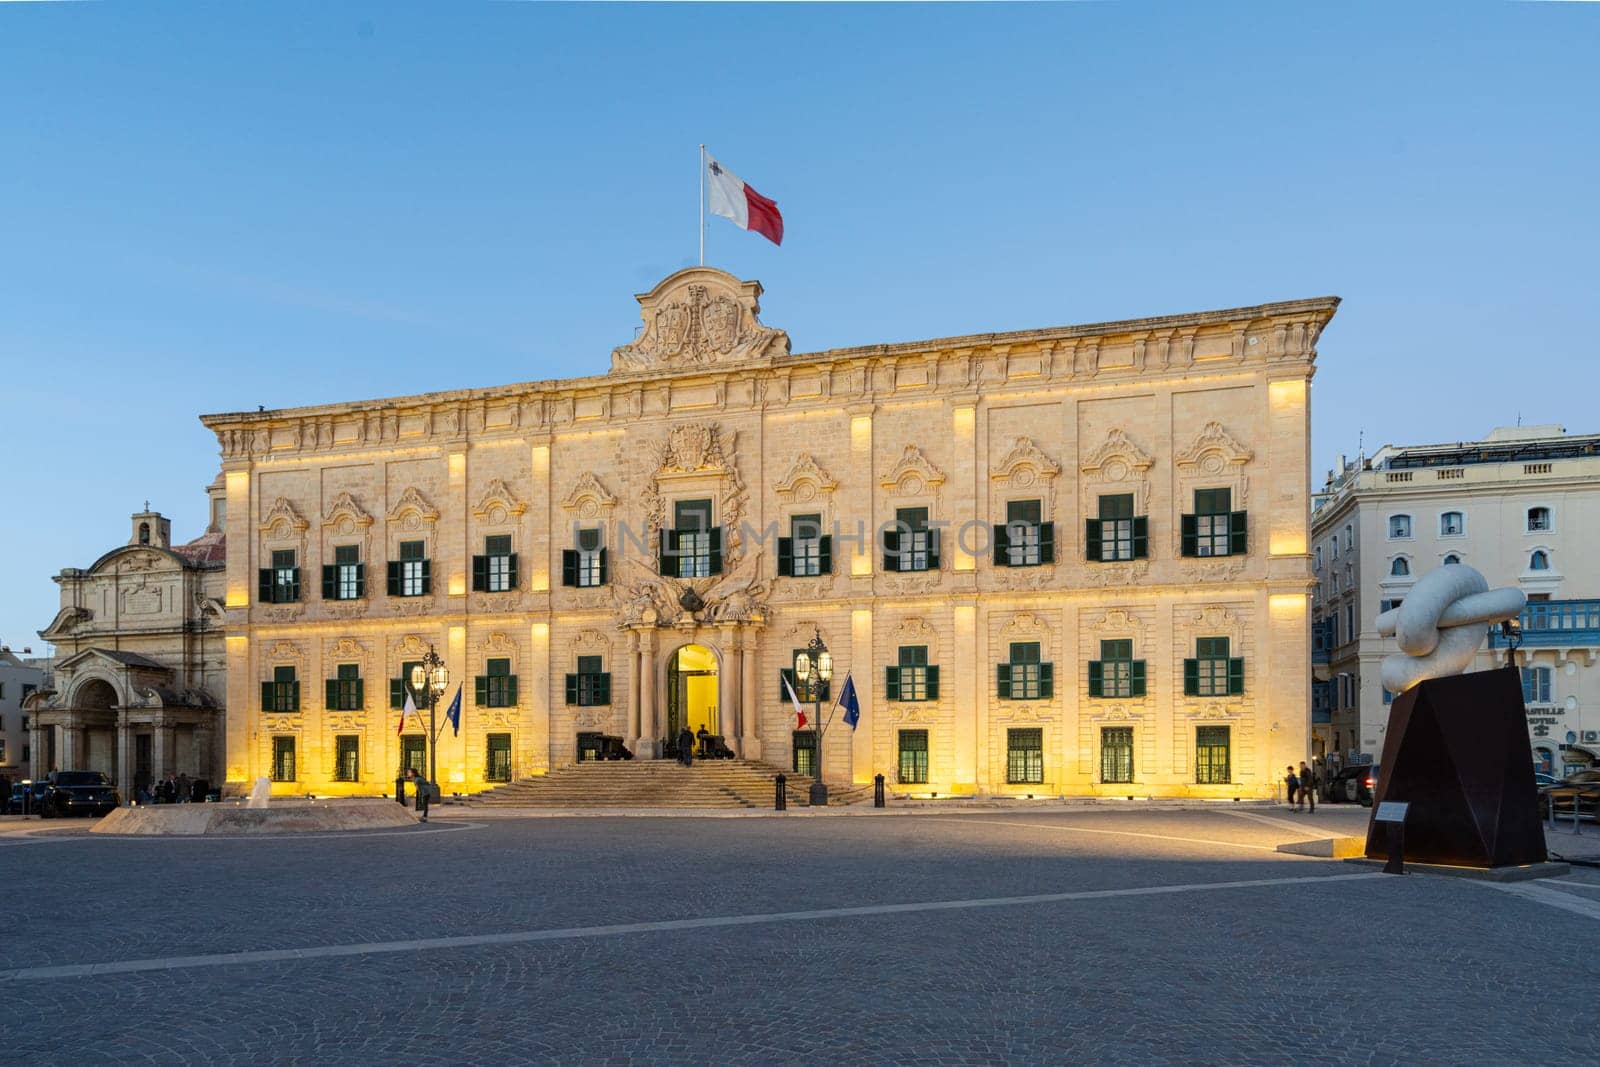 hotel building of Castile in Valletta, Malta by sergiodv